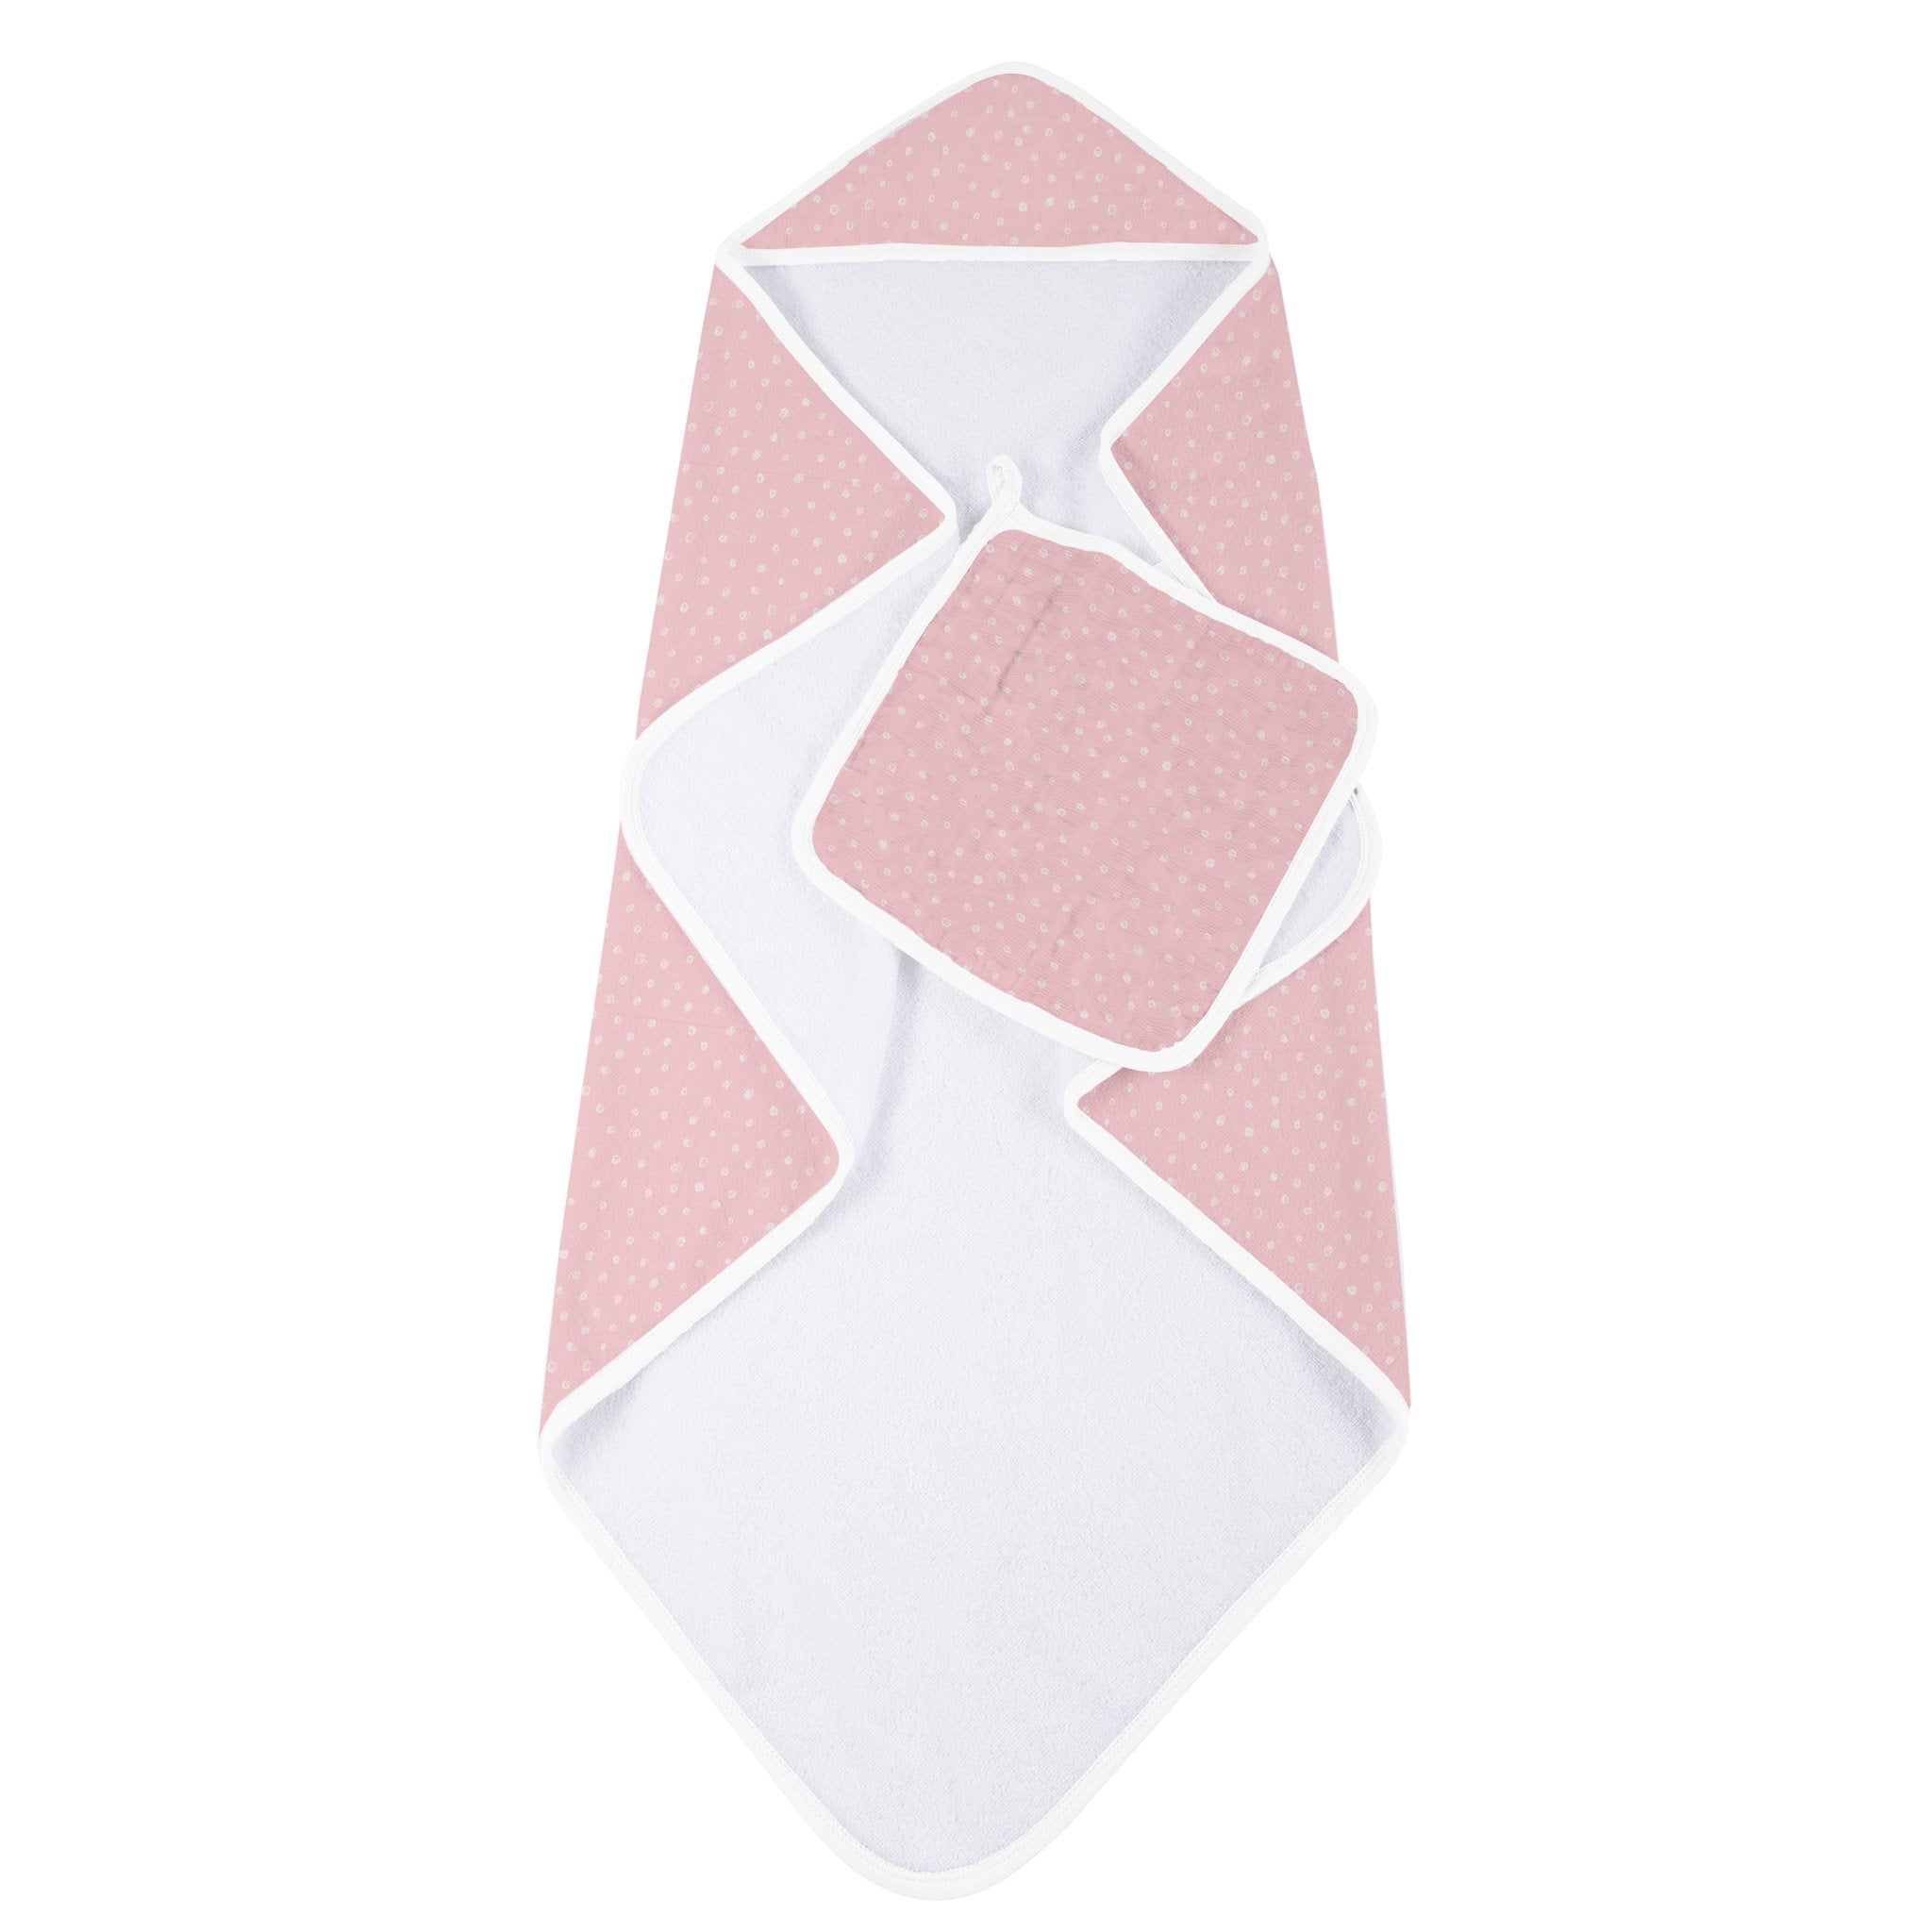 Pink Pearl Polka Dot Hooded Towel and Washcloth Set - HoneyBug 